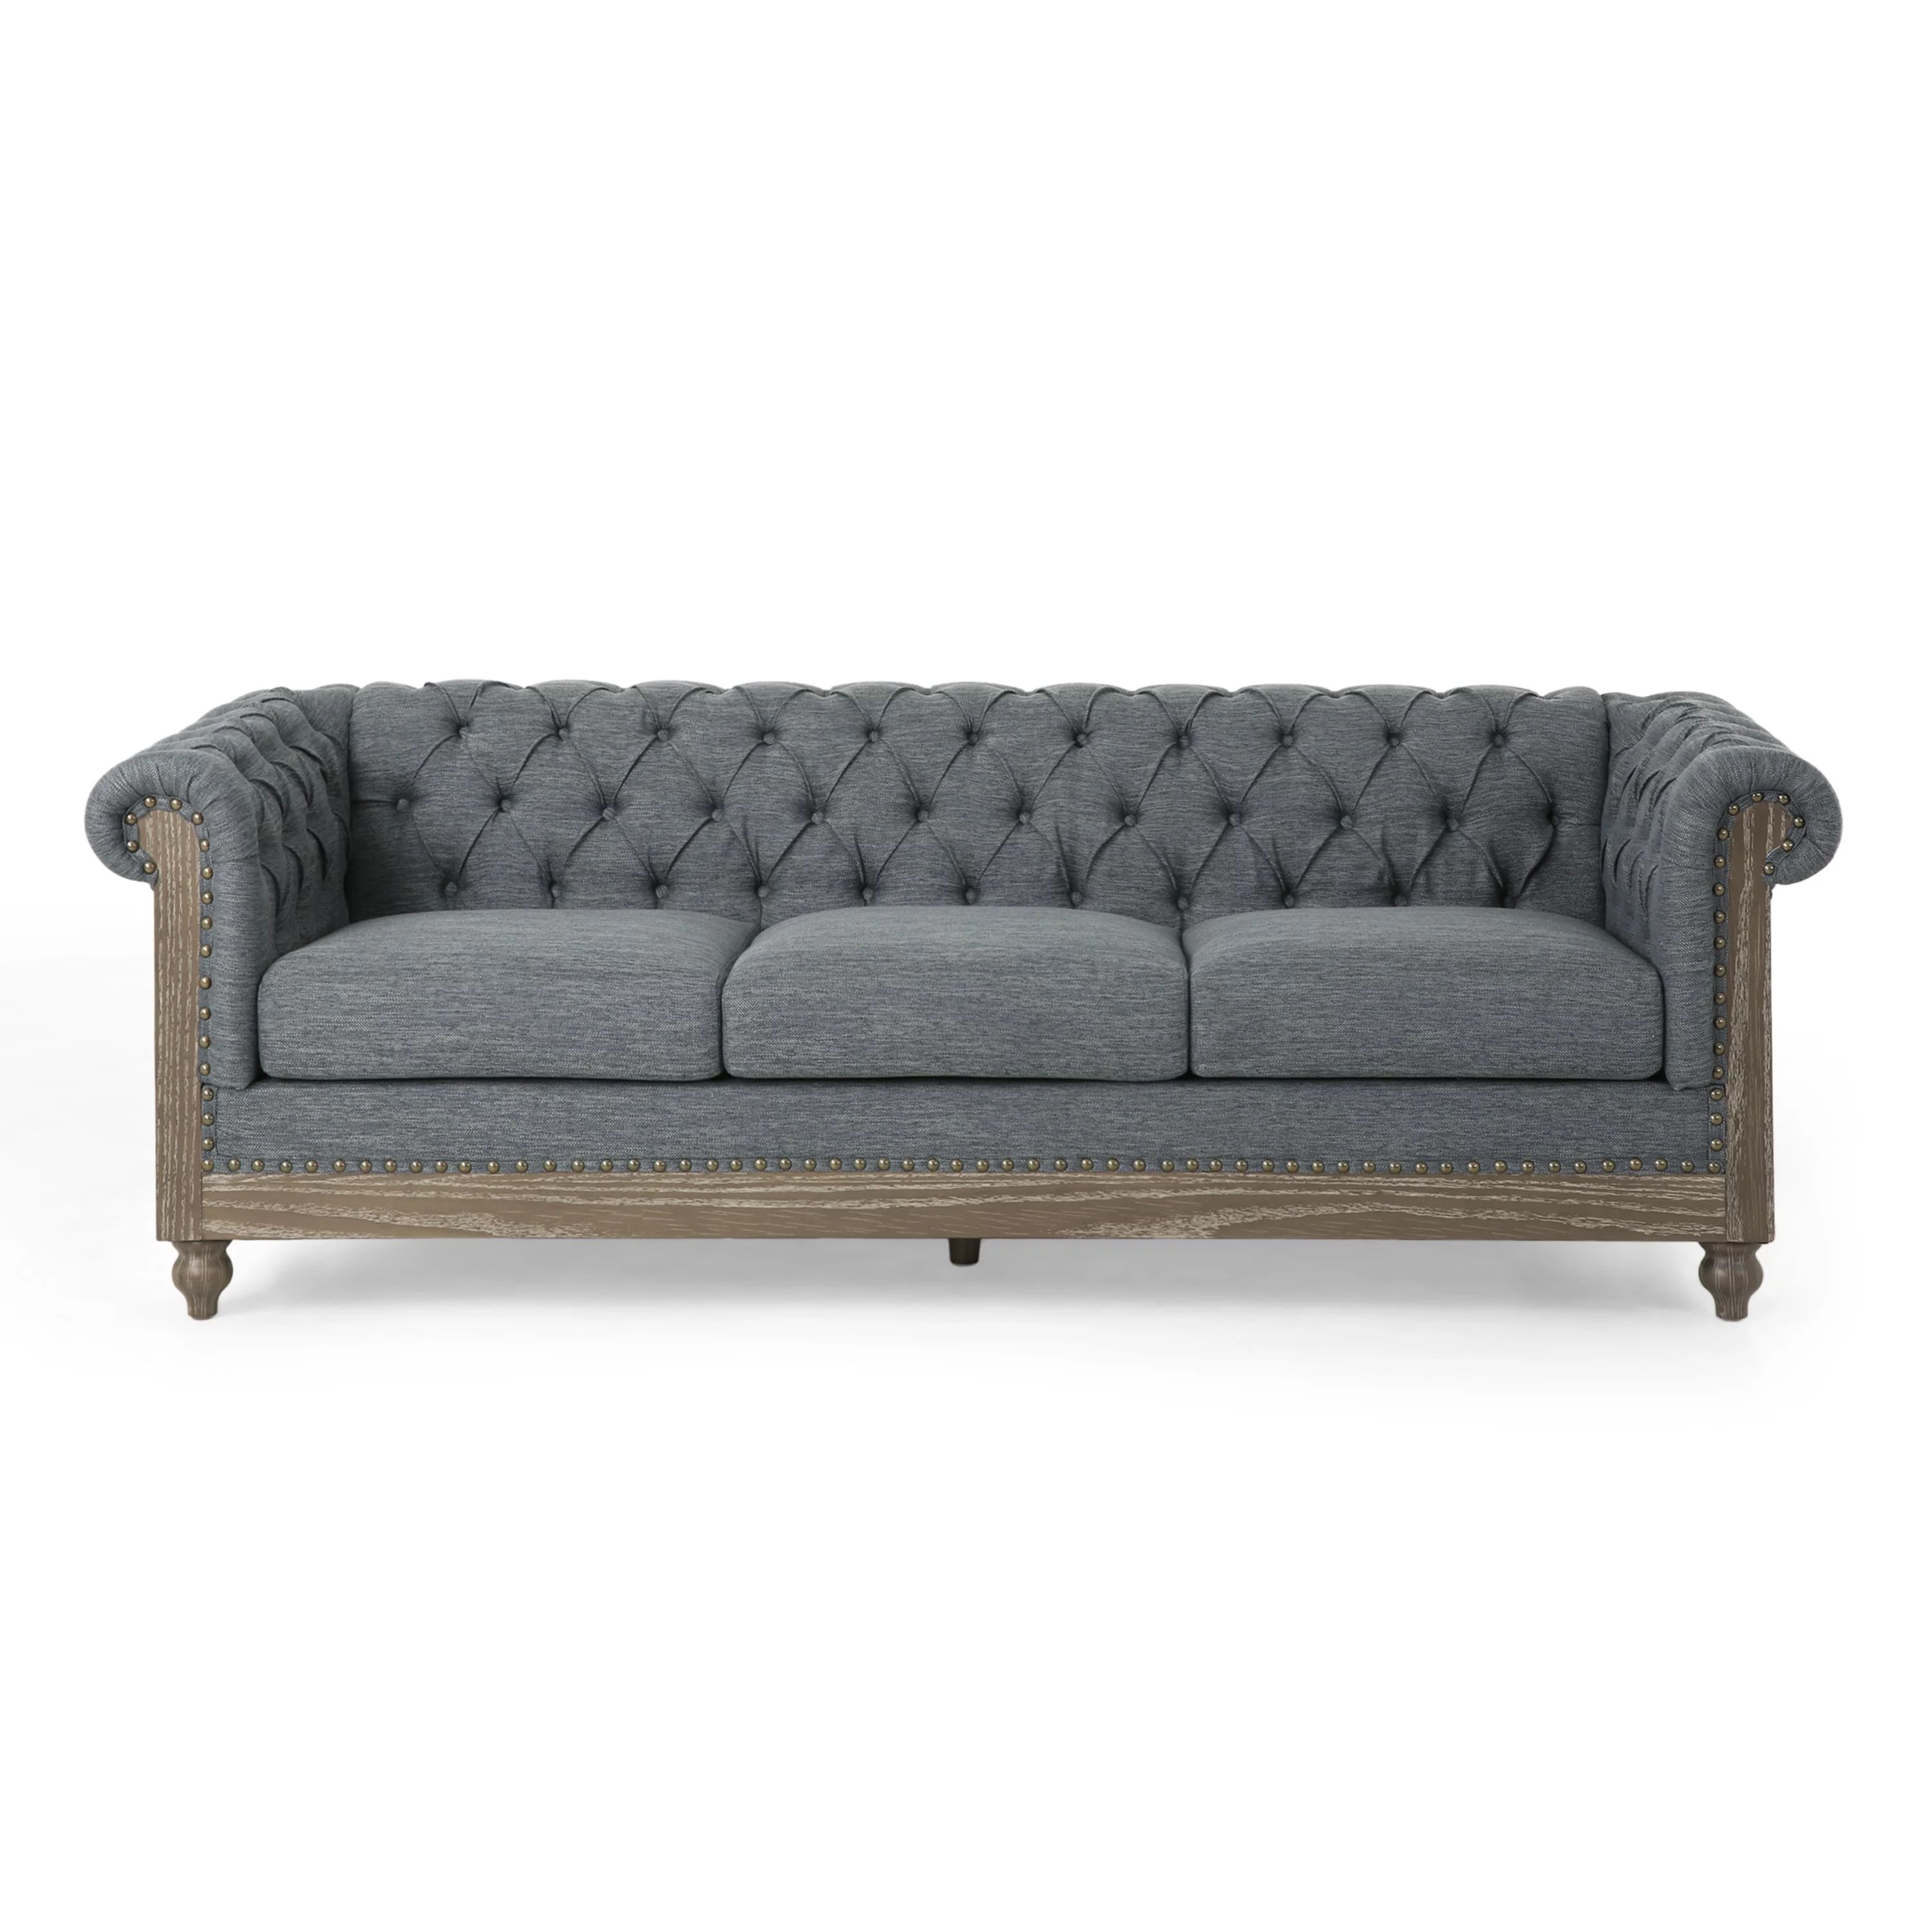 GDF Studio Alejandro Chesterfield Tufted 3 Seater Sofa with Nailhead Trim, Charcoal and Dark Brow... | Walmart (US)